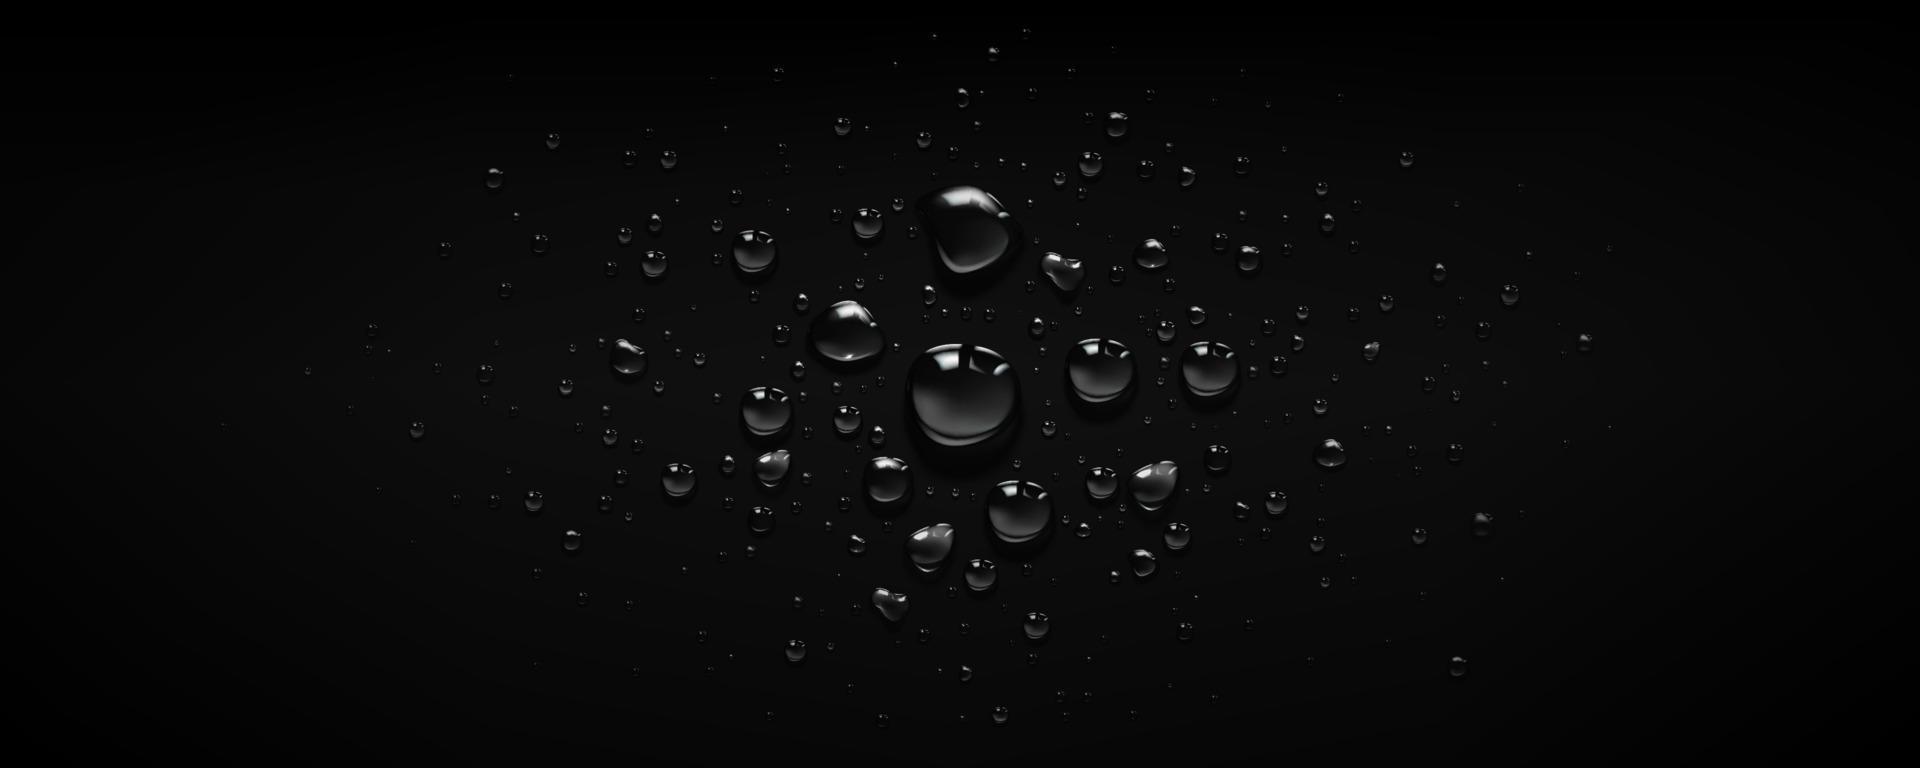 Water drops on black background, rain condensation vector